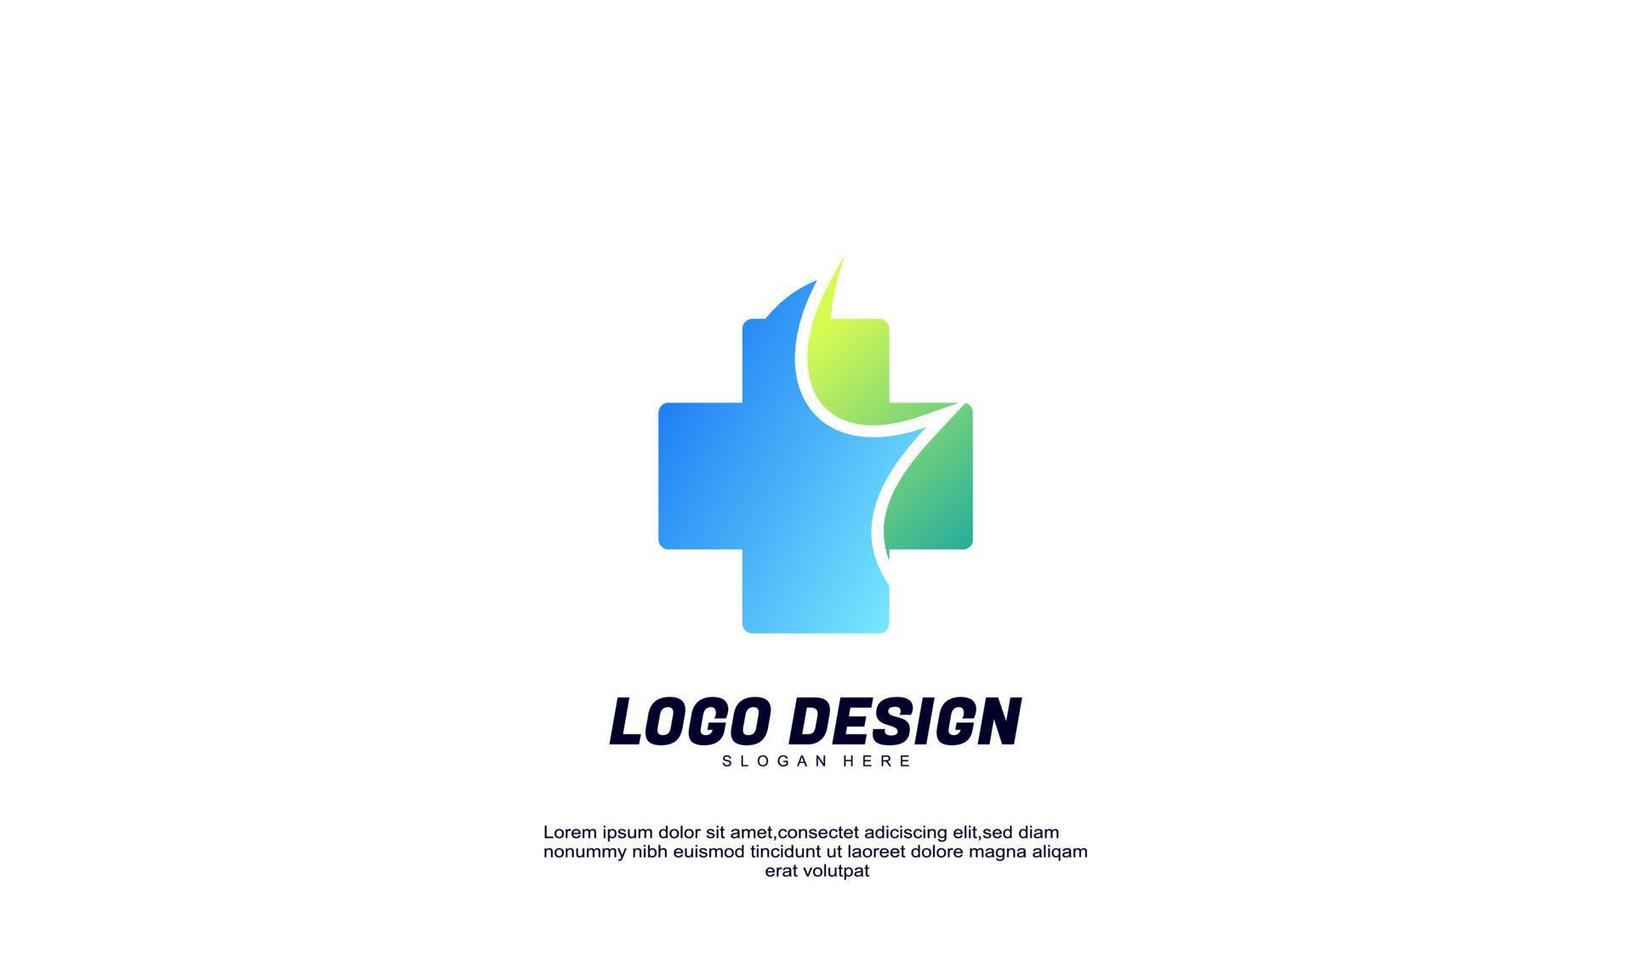 estoque vetor logotipo criativo abstrato farmácia médica para modelo de design de empresa saudável